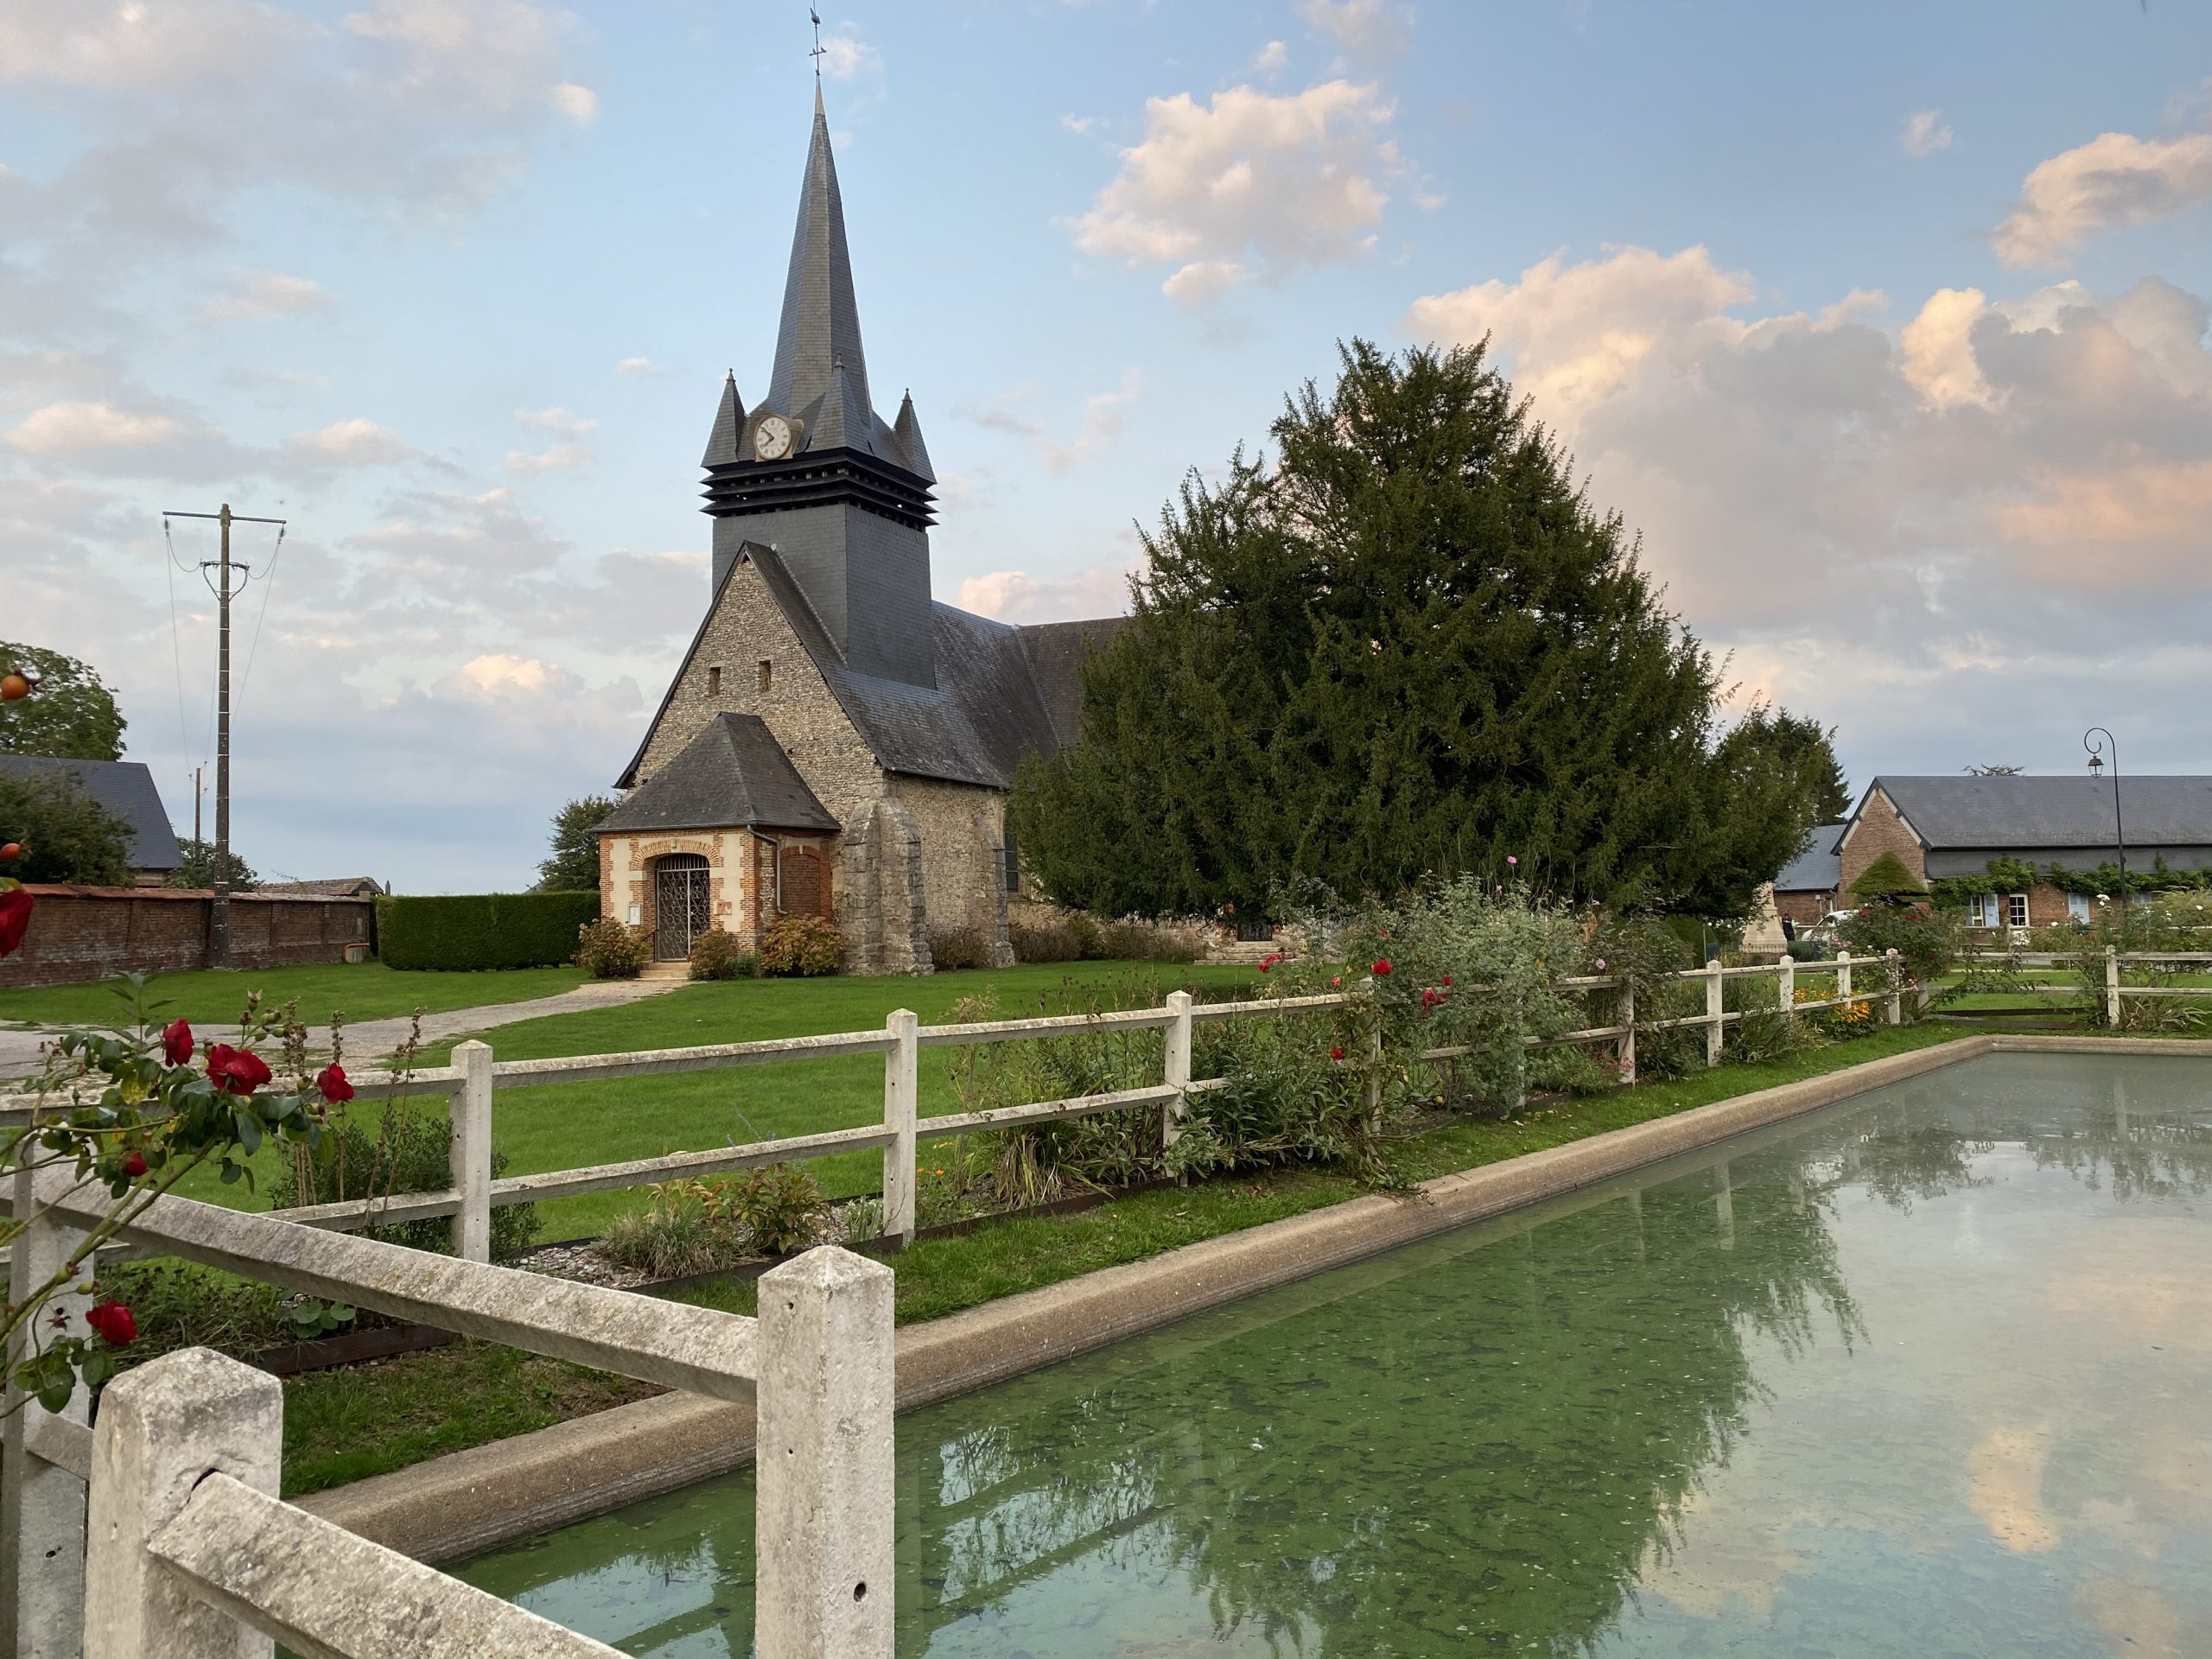 Eglise-et-son-plan-d-eau-Fleury-la-Foret-2021-OTLA-scaled.jpg